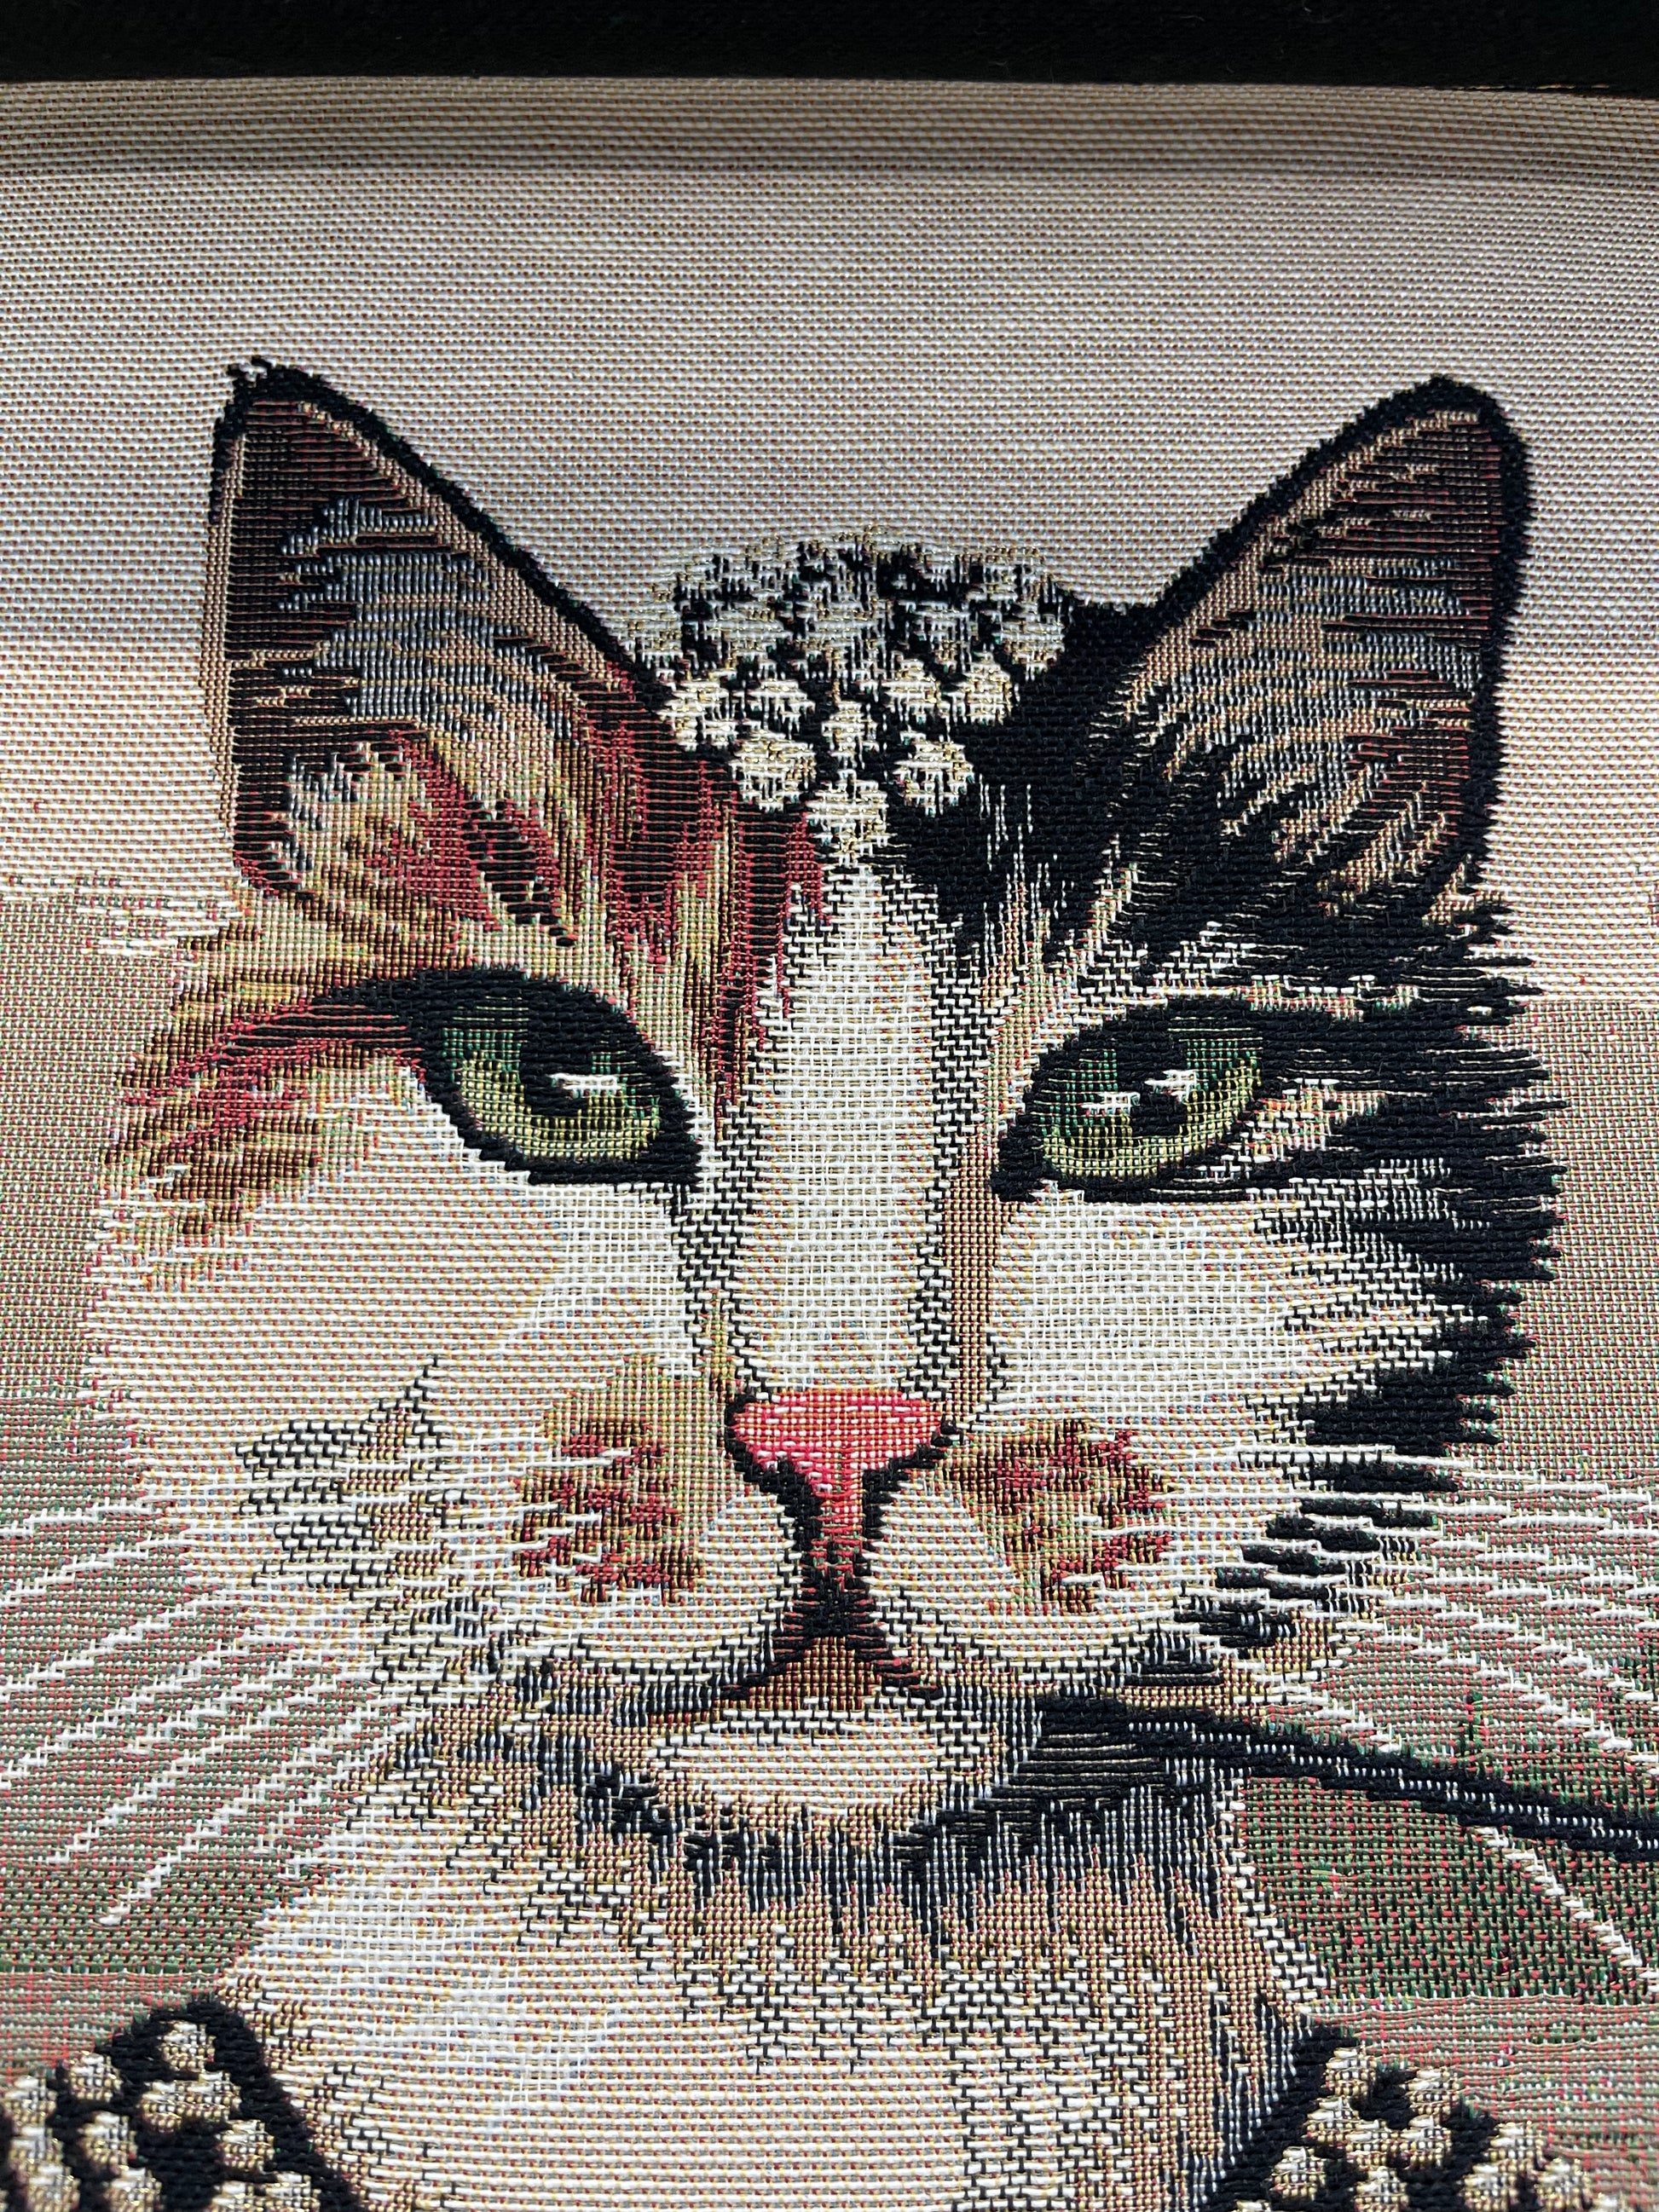 Cat Print Panel Tapestry Fabric